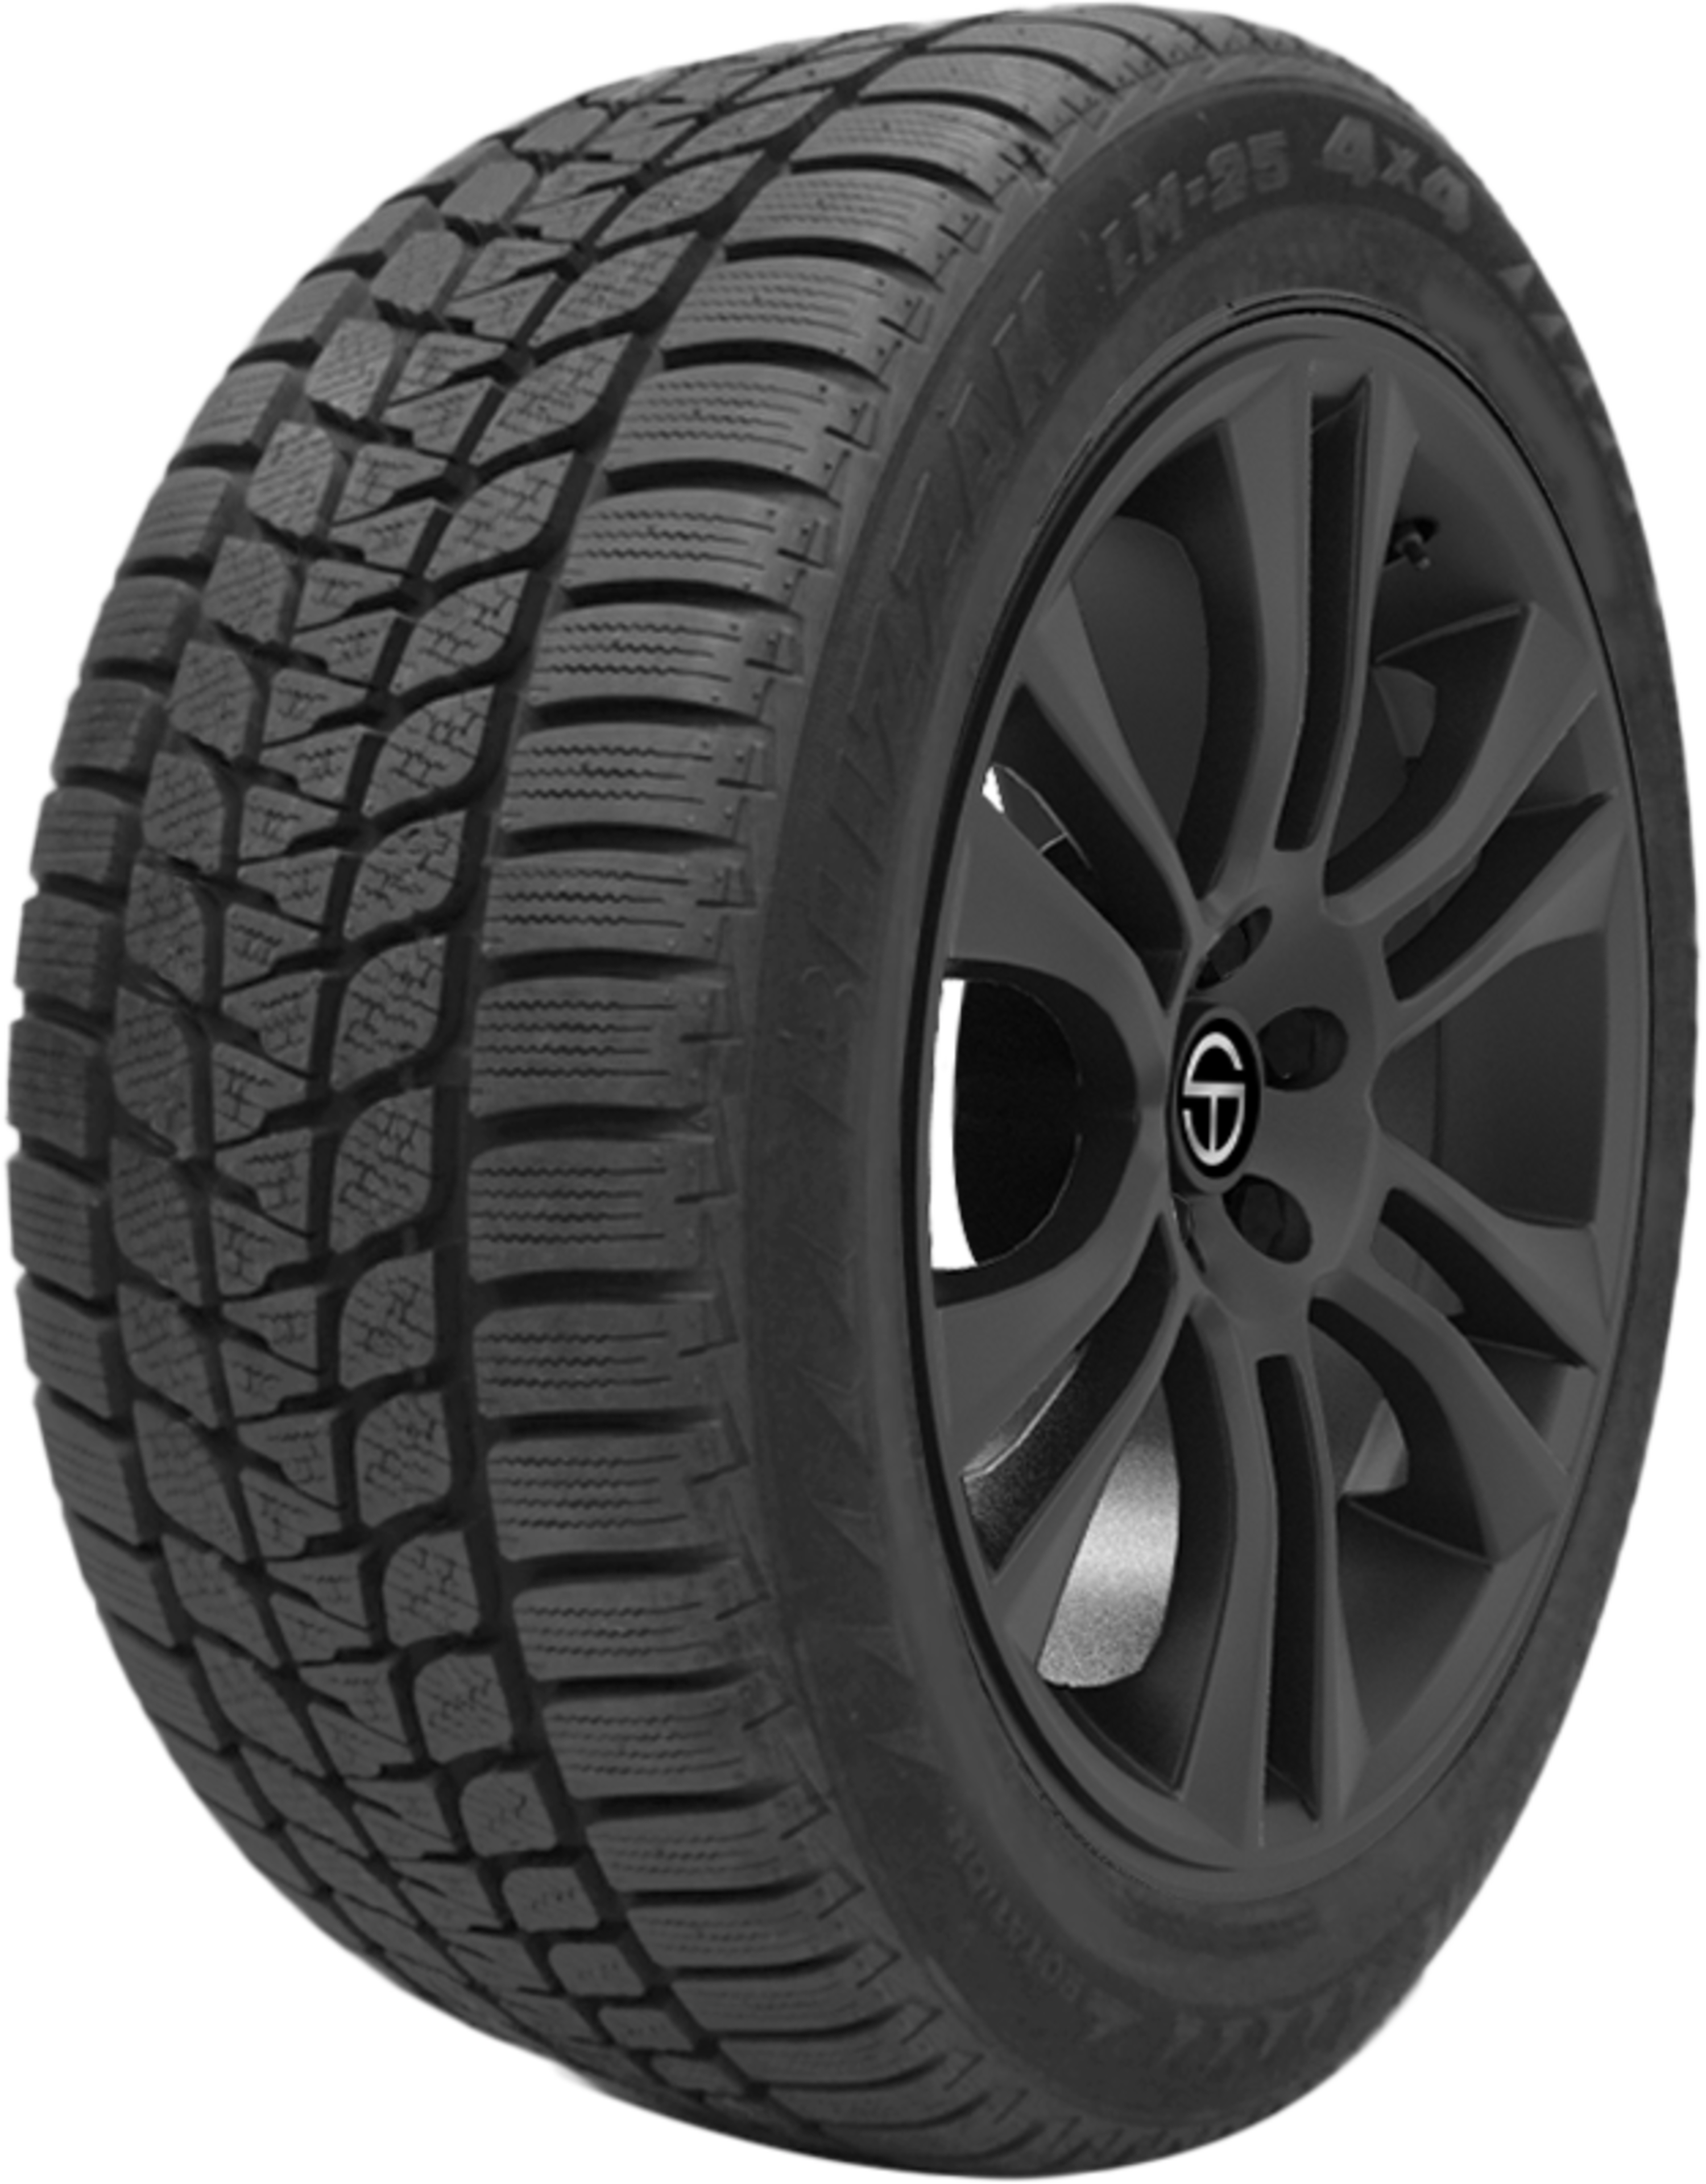 4X4 MOE SimpleTire Tires Blizzak Online Buy | LM-25 Bridgestone